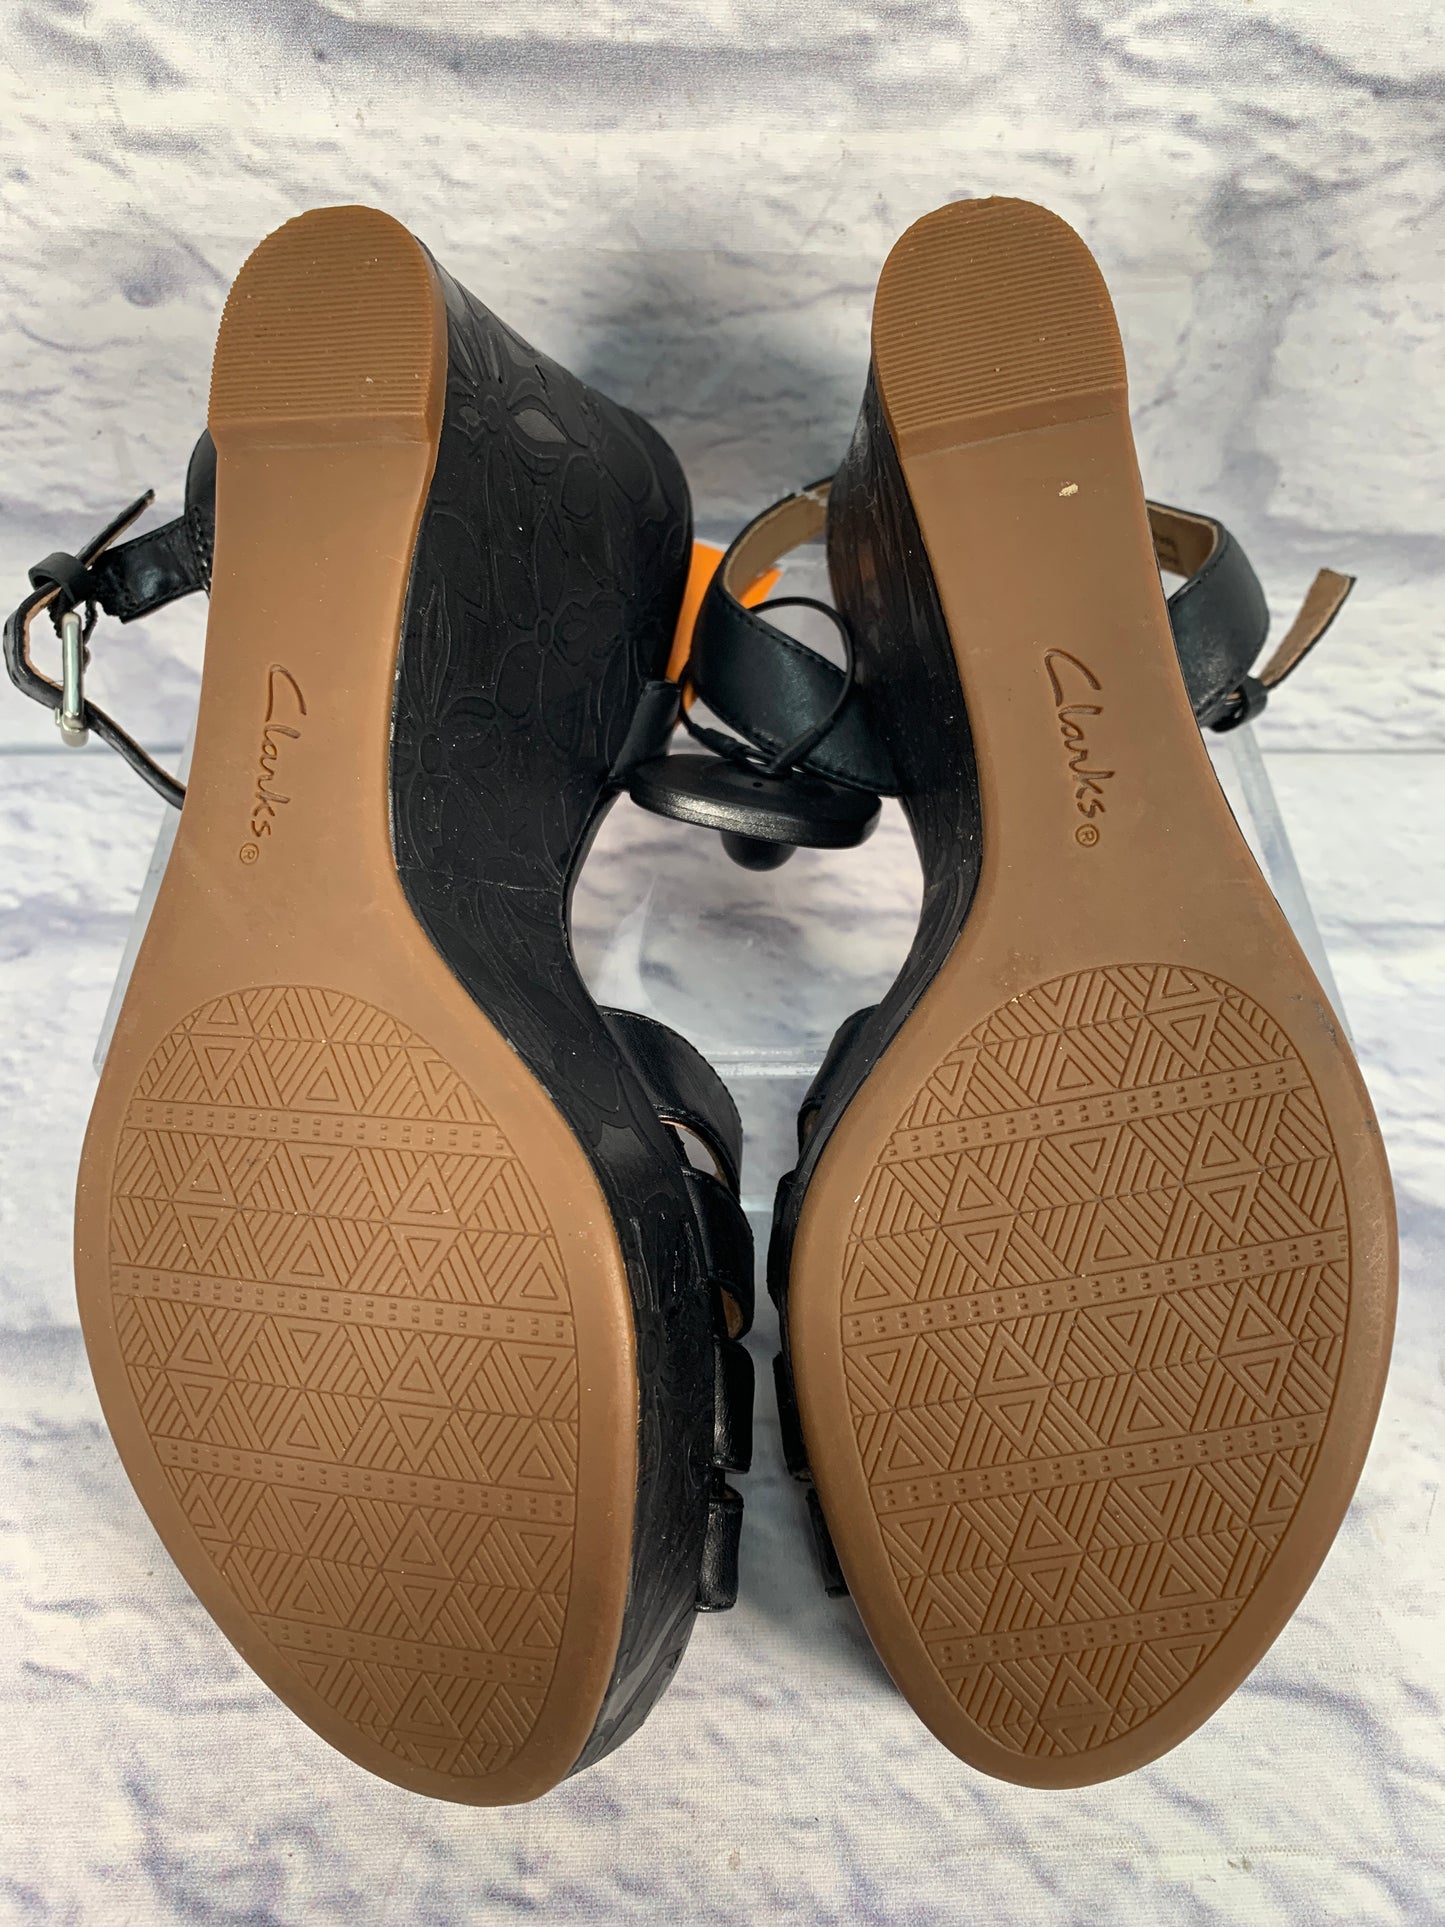 Sandals Heels Platform By Clarks  Size: 7.5